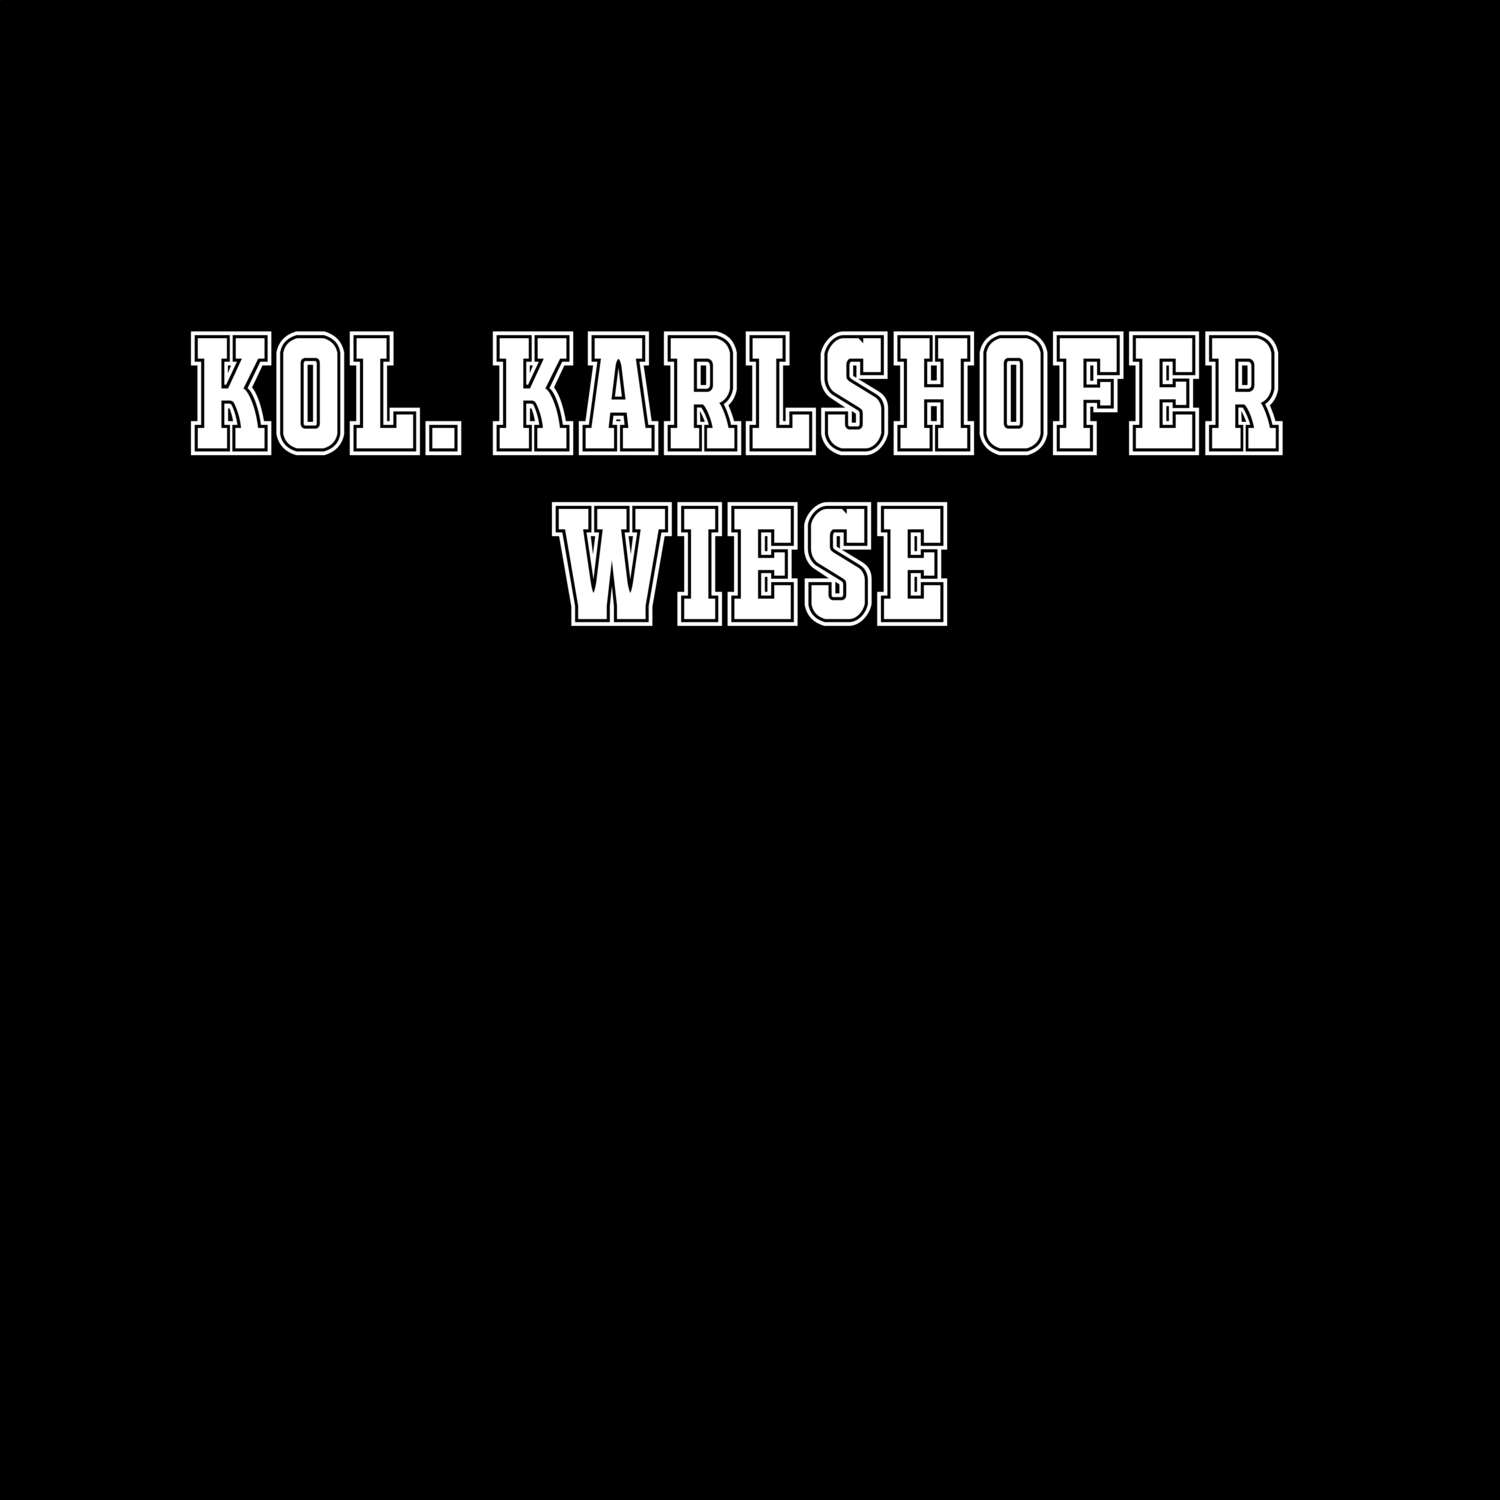 Kol. Karlshofer Wiese T-Shirt »Classic«